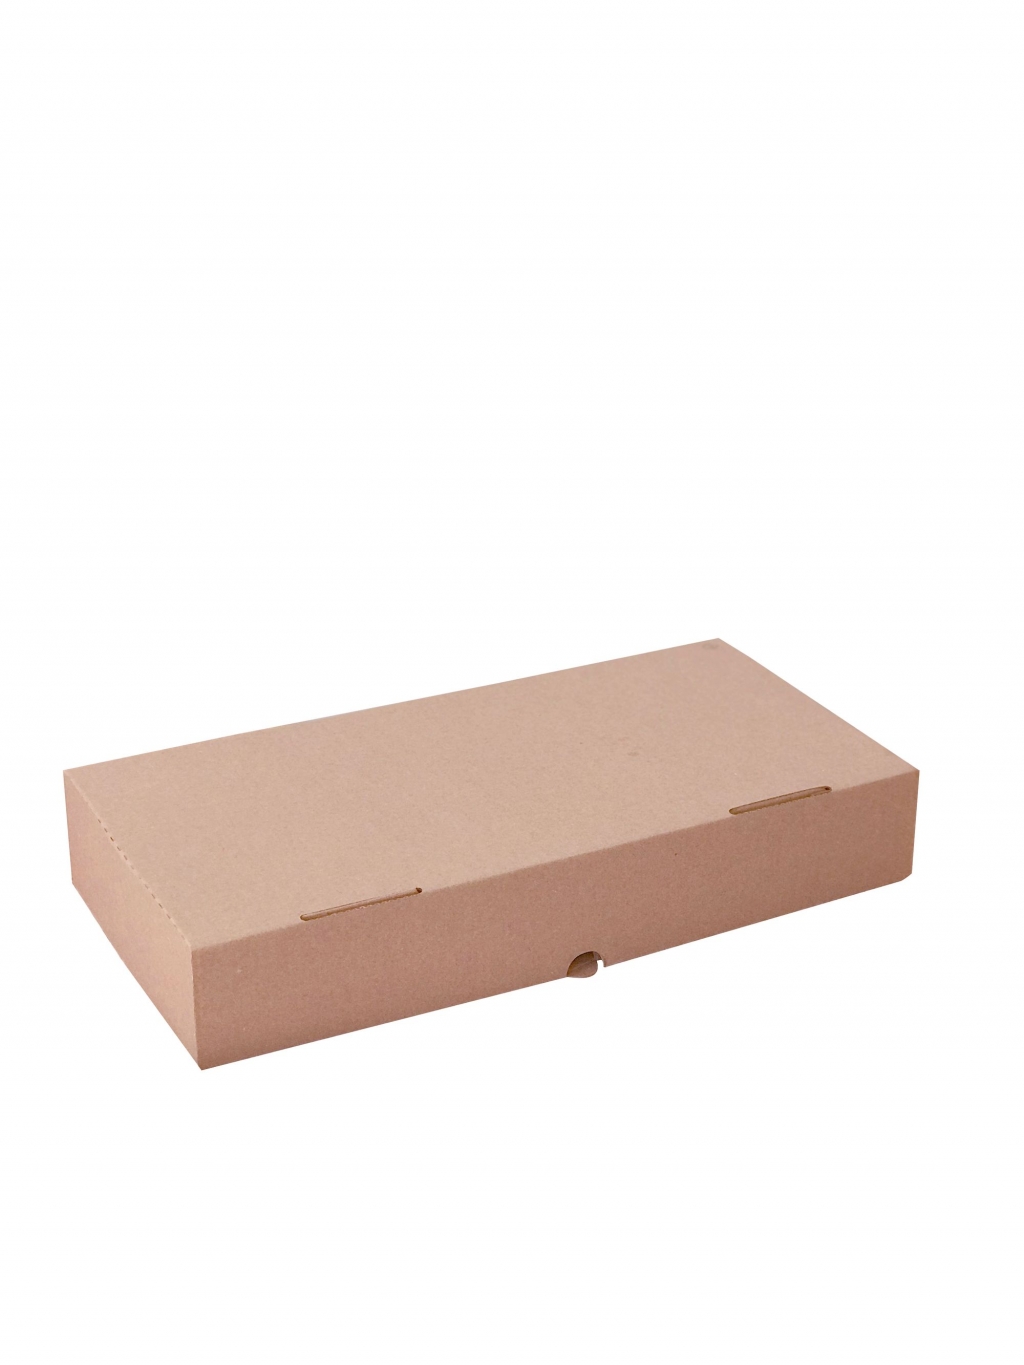 19 x 39 x 6,5 cm kapaklı kutu